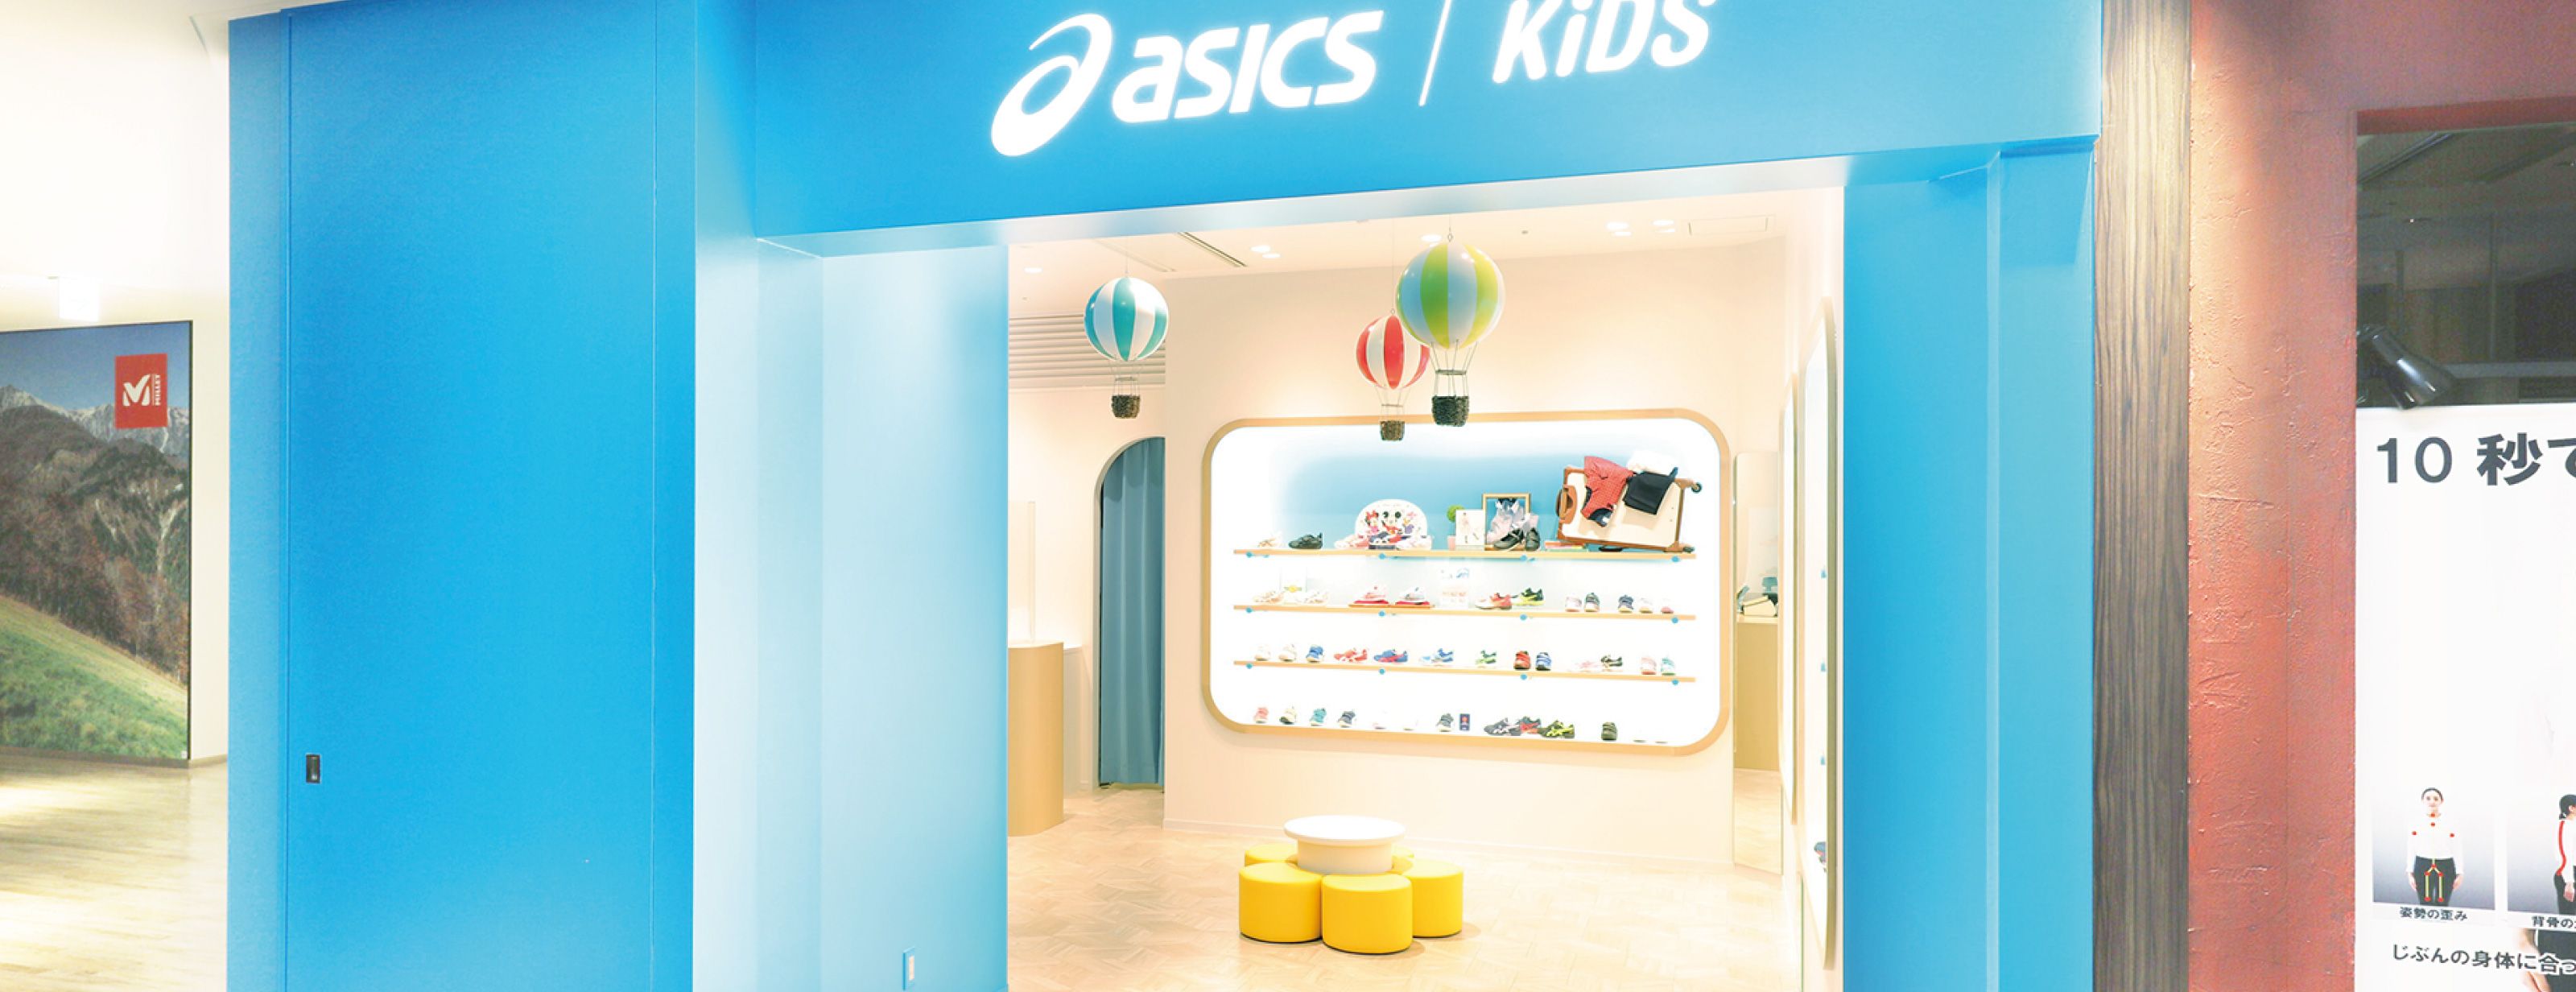 ASICS KIDS グランフロント大阪